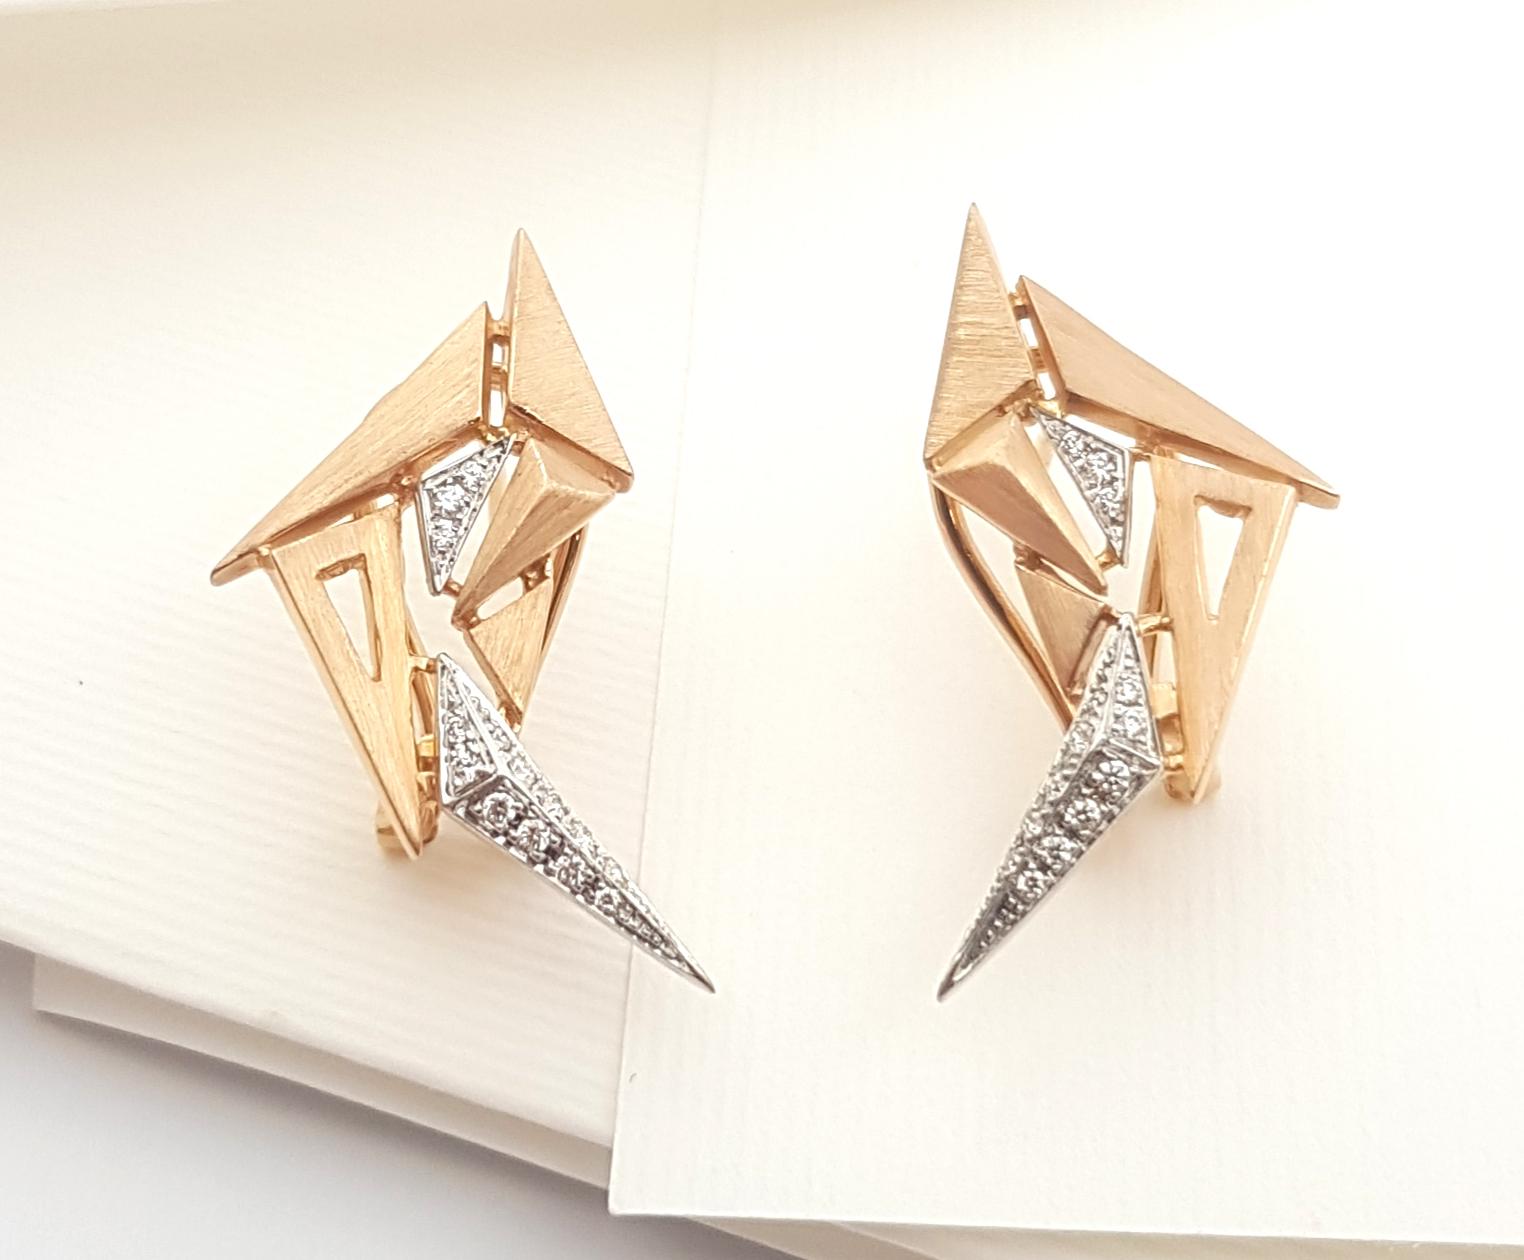 Origami Brushed Gold Diamond Swan Earrings 18k Rose Gold For Sale 1